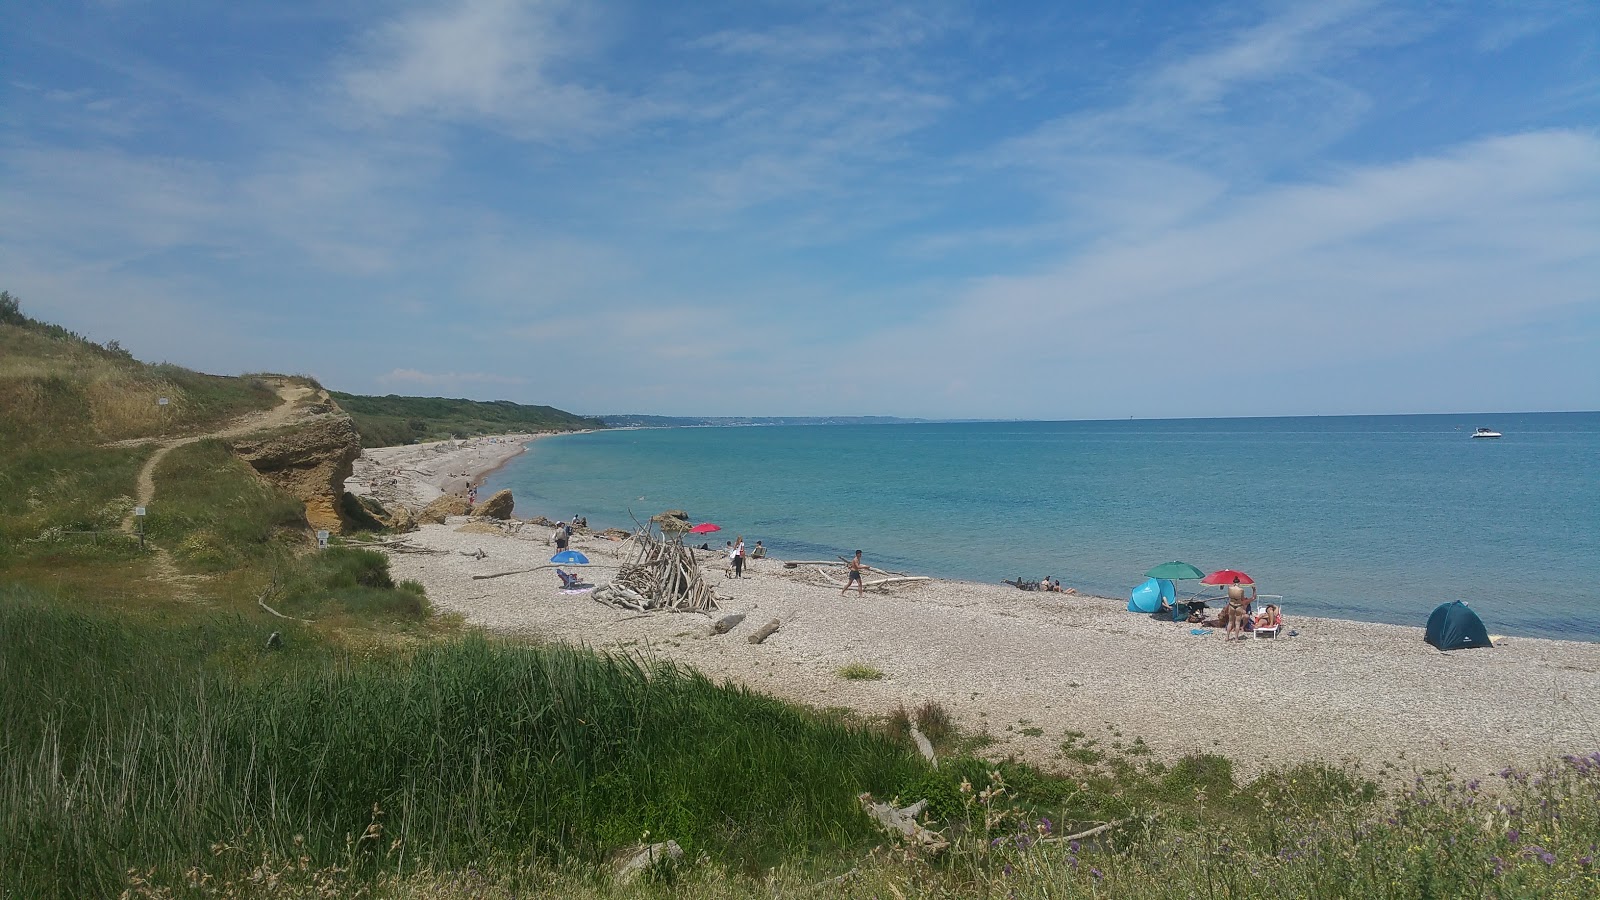 Photo de Spiaggia di Punta Aderci situé dans une zone naturelle